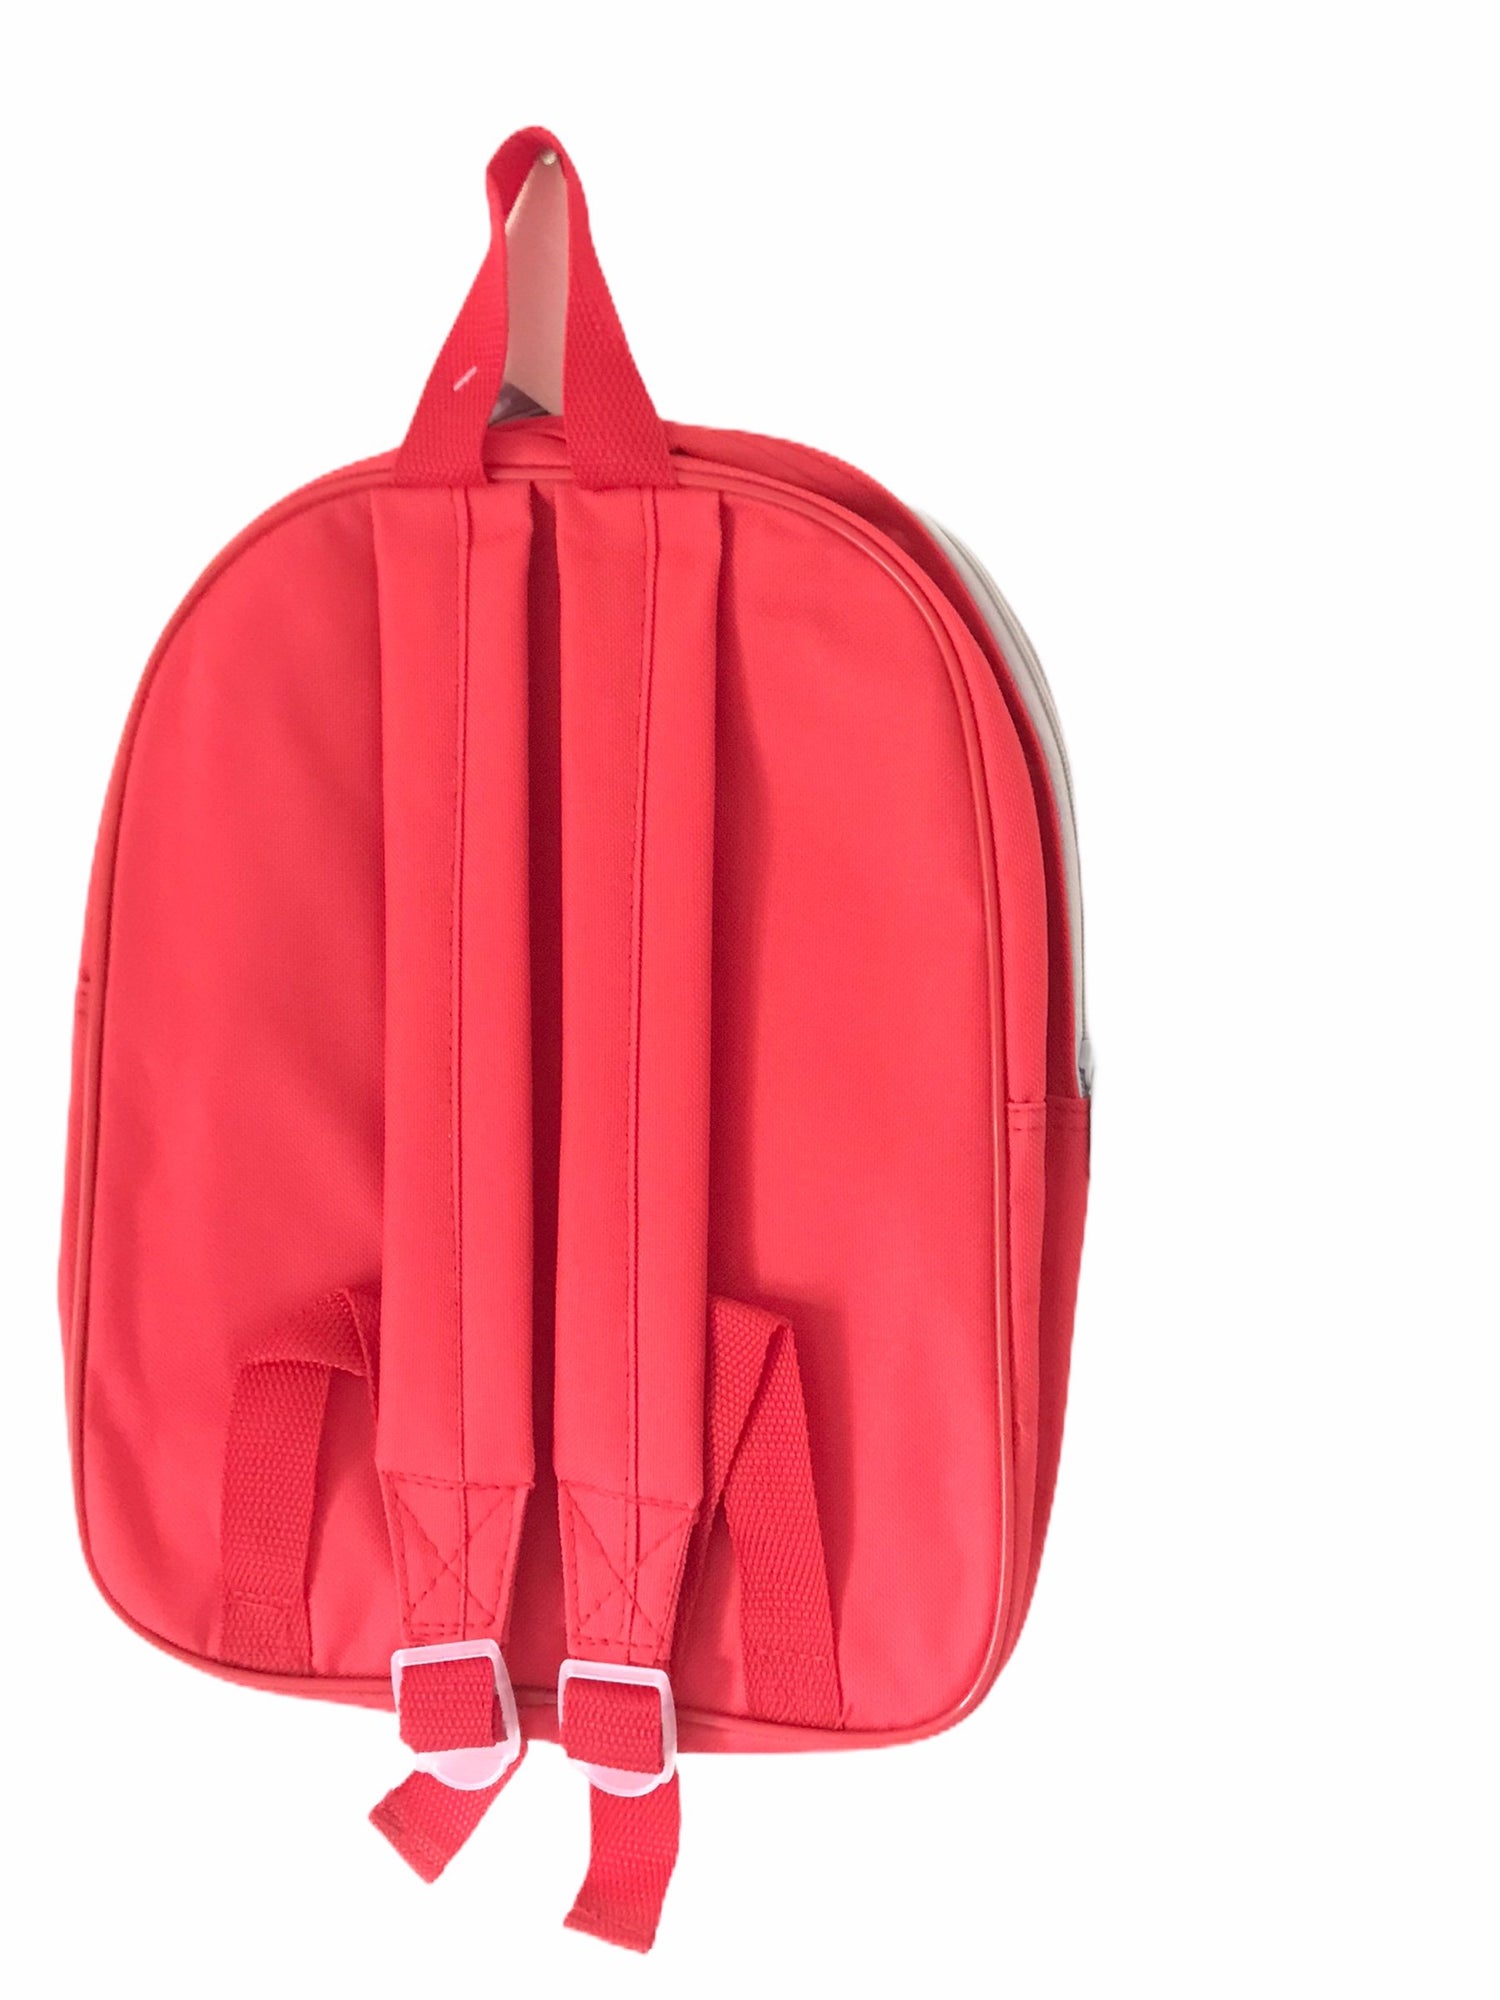 Avengers Backpack Bag. - Glo Selections Kids Shoes